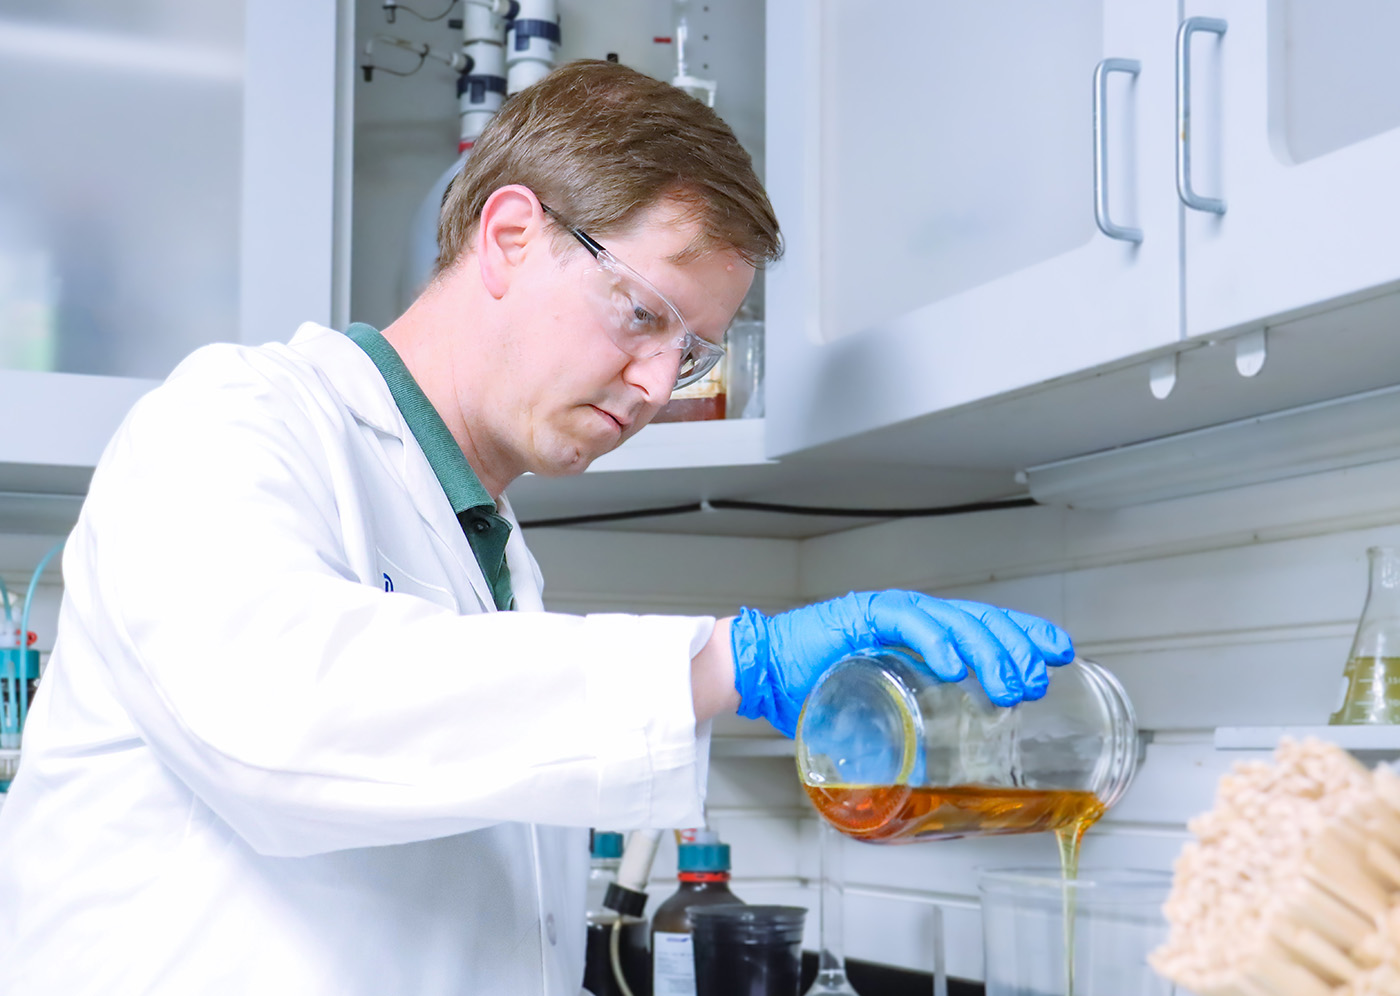 David Moray, Formulation Chemist at FSI, pouring ingredient for testing custom polyurethane formulation